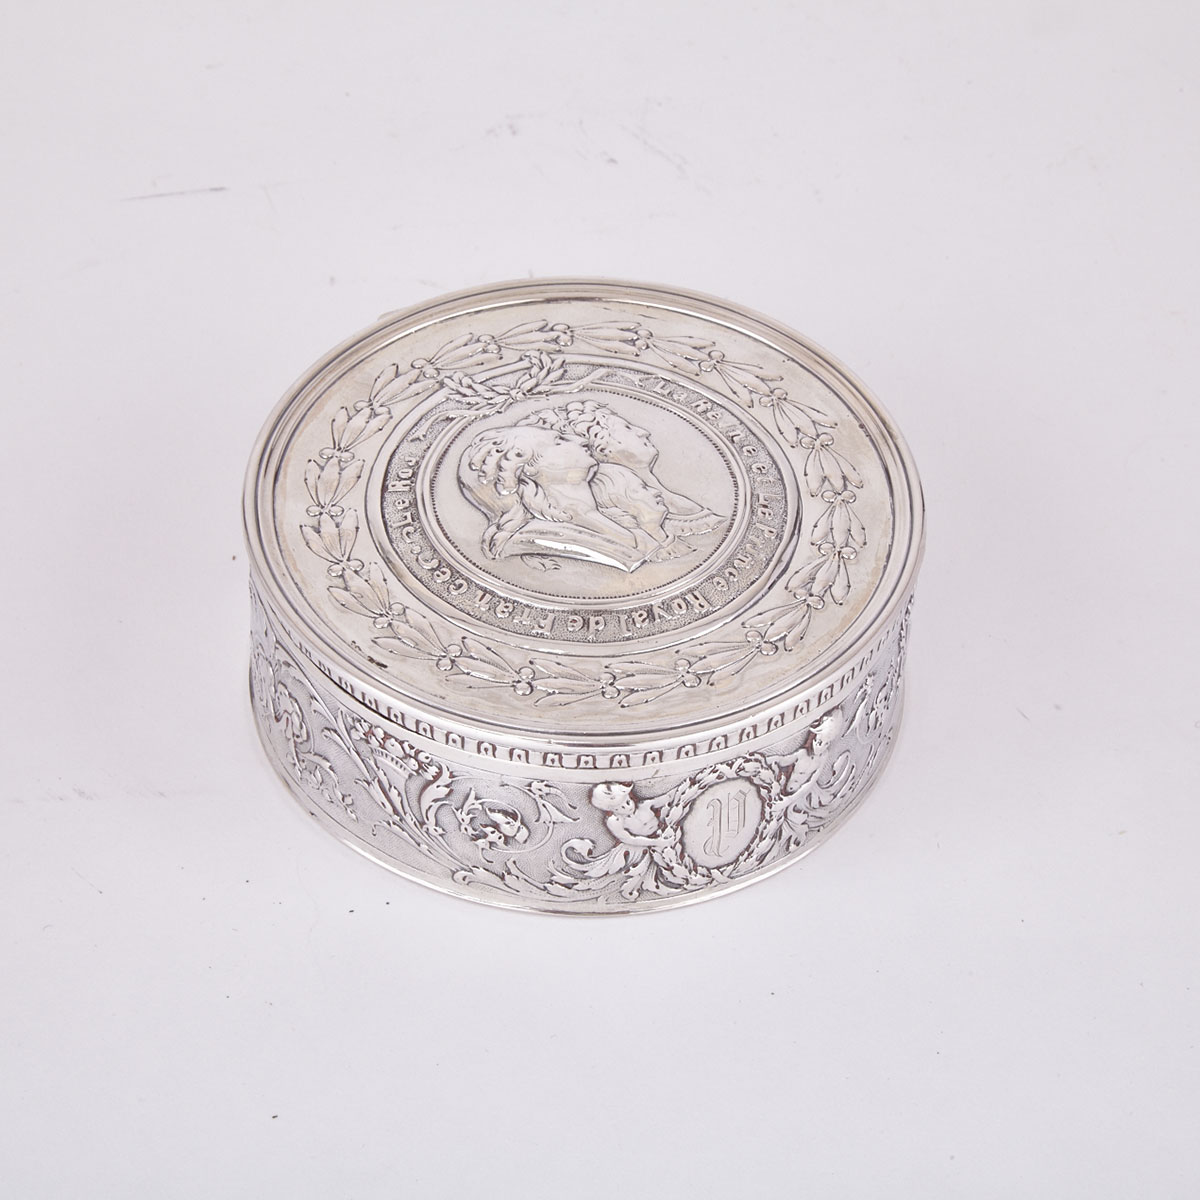 German Silver Circular Box, probably B. Neresheimer & Söhne, Hanau, c.1900